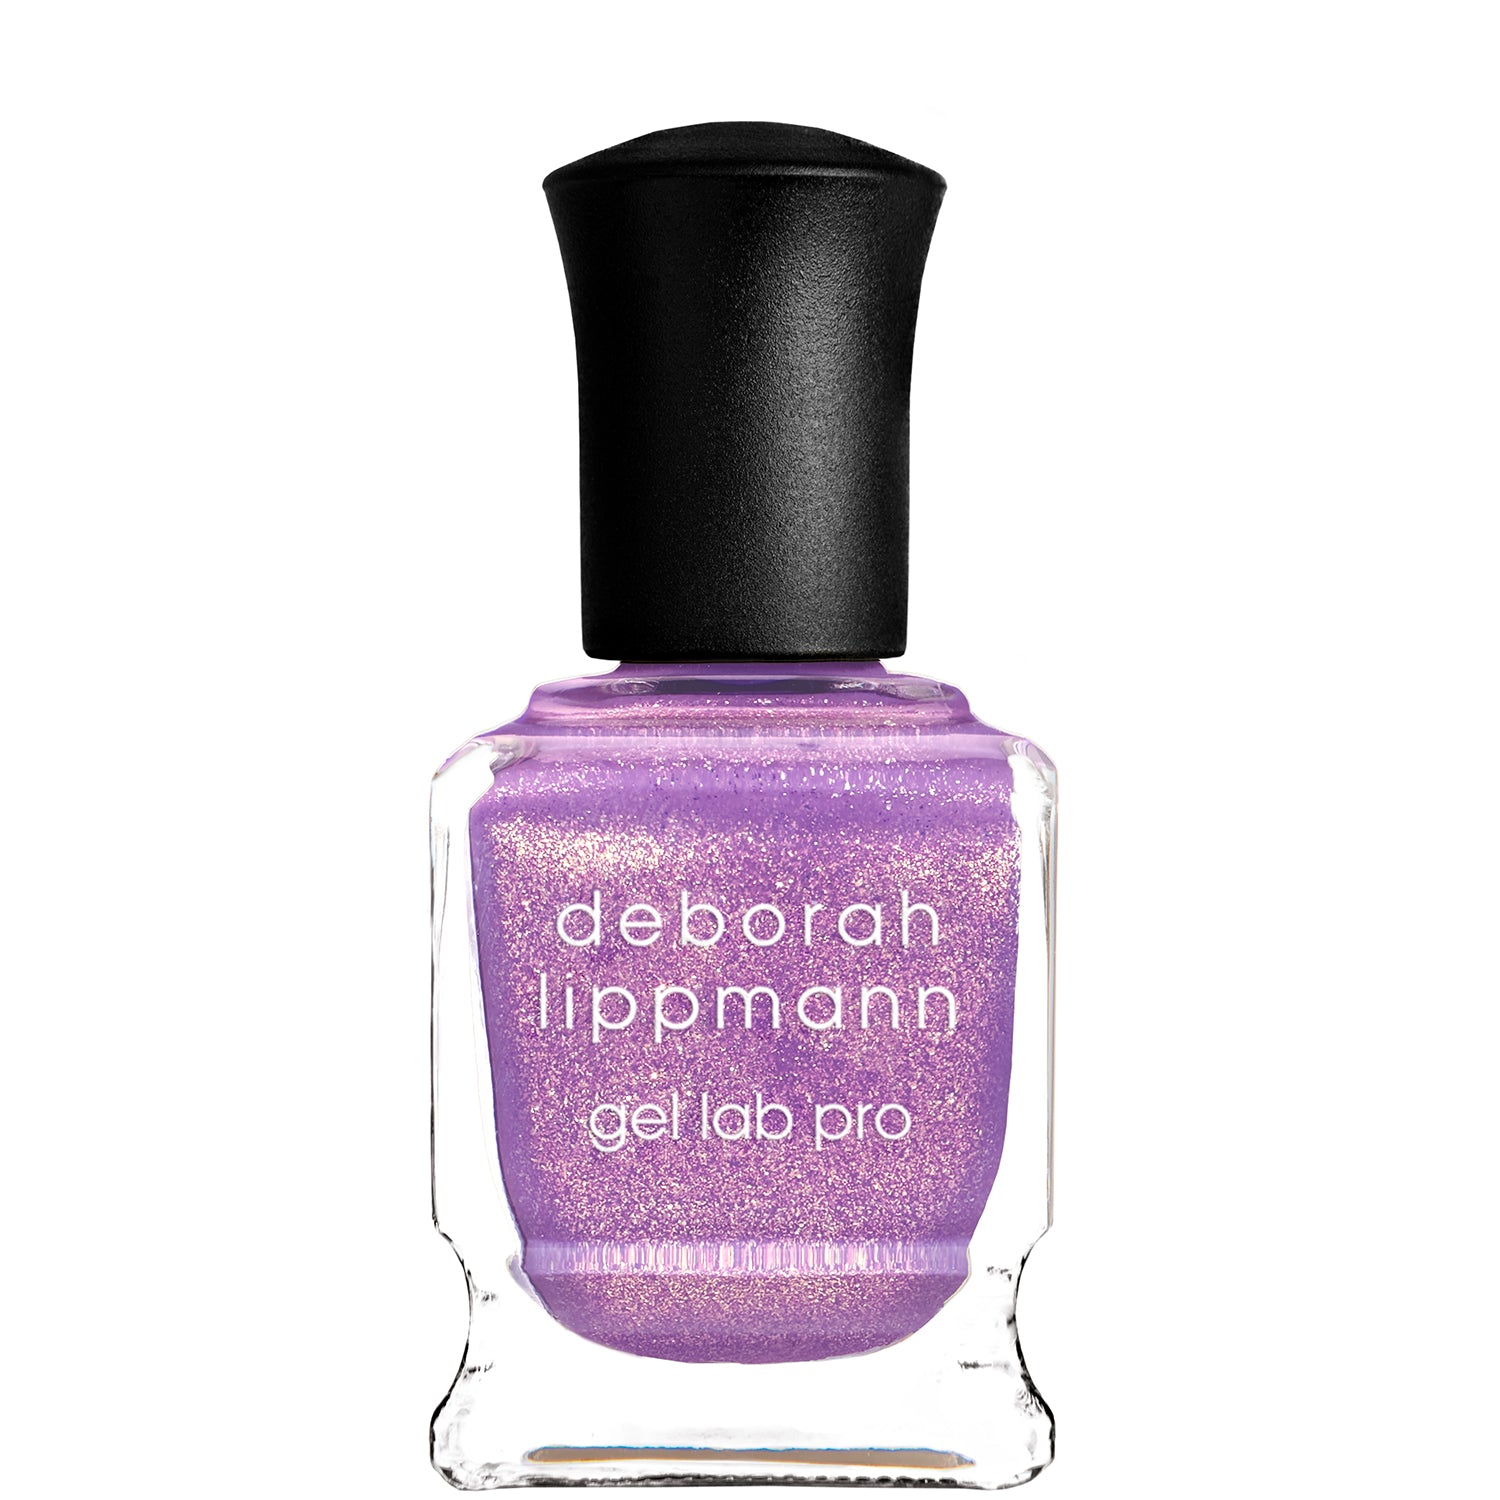 She's A Rocket nail polish - Deborah Lippmann